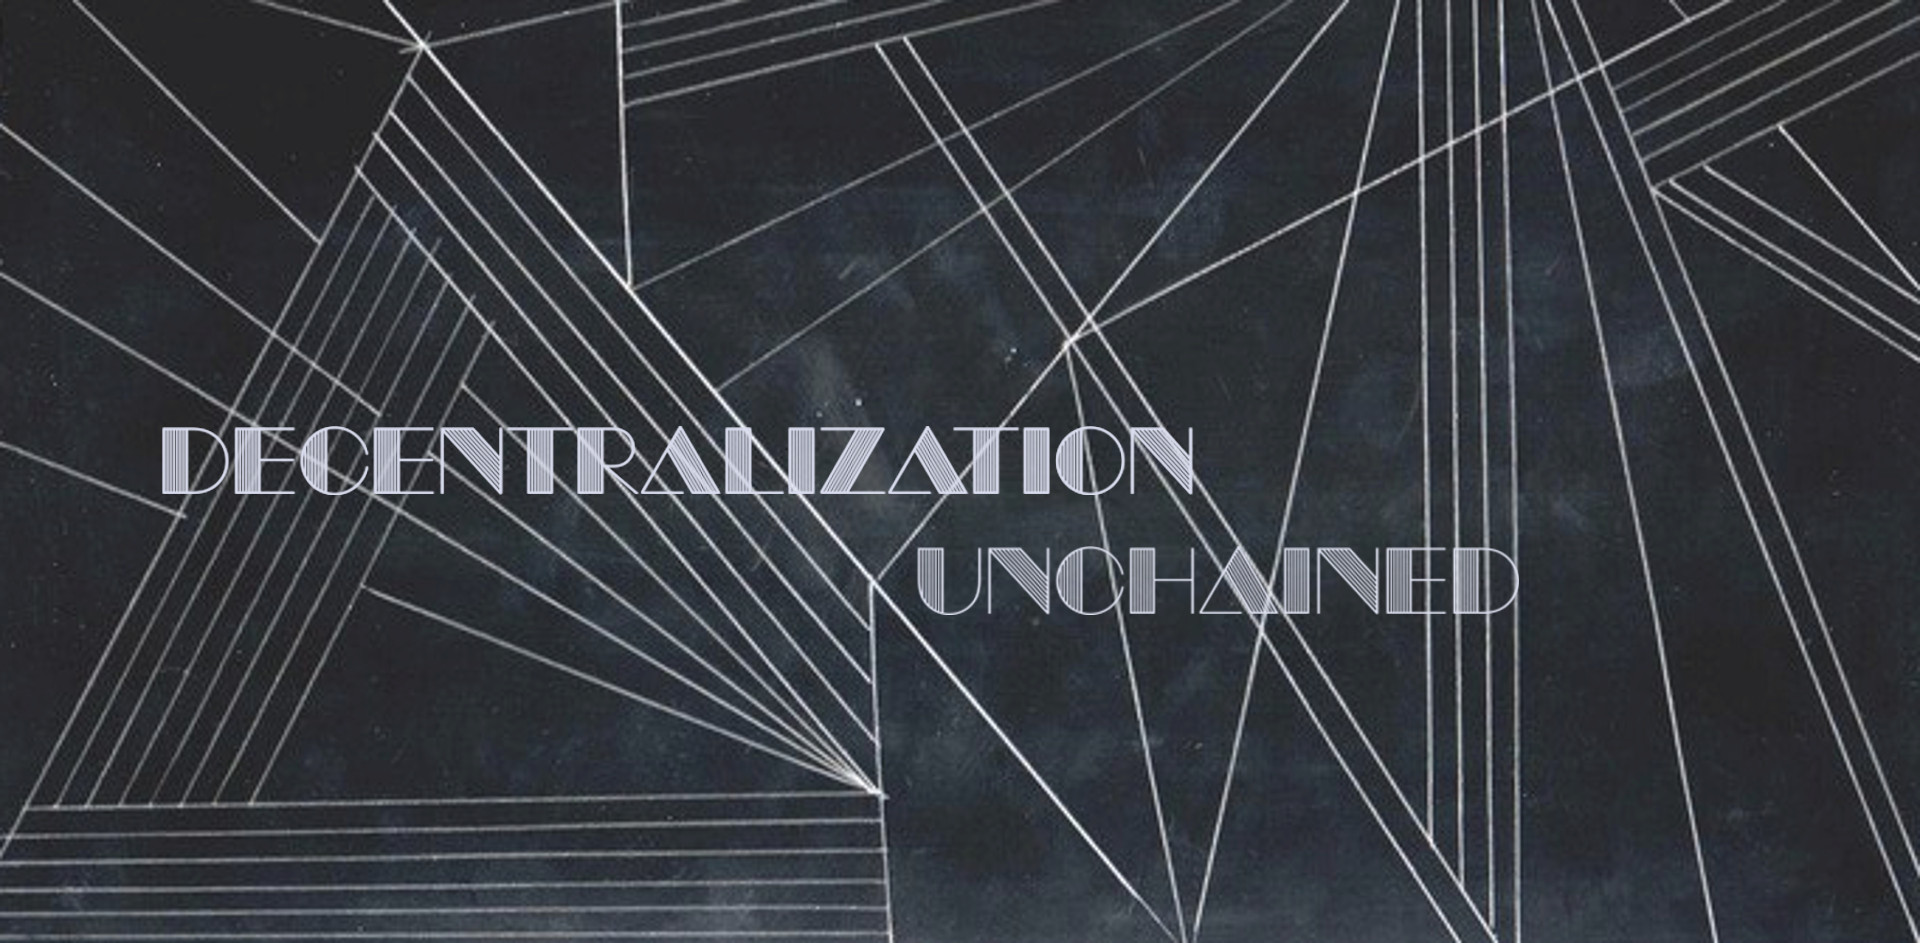 Decentralization Unchained logo